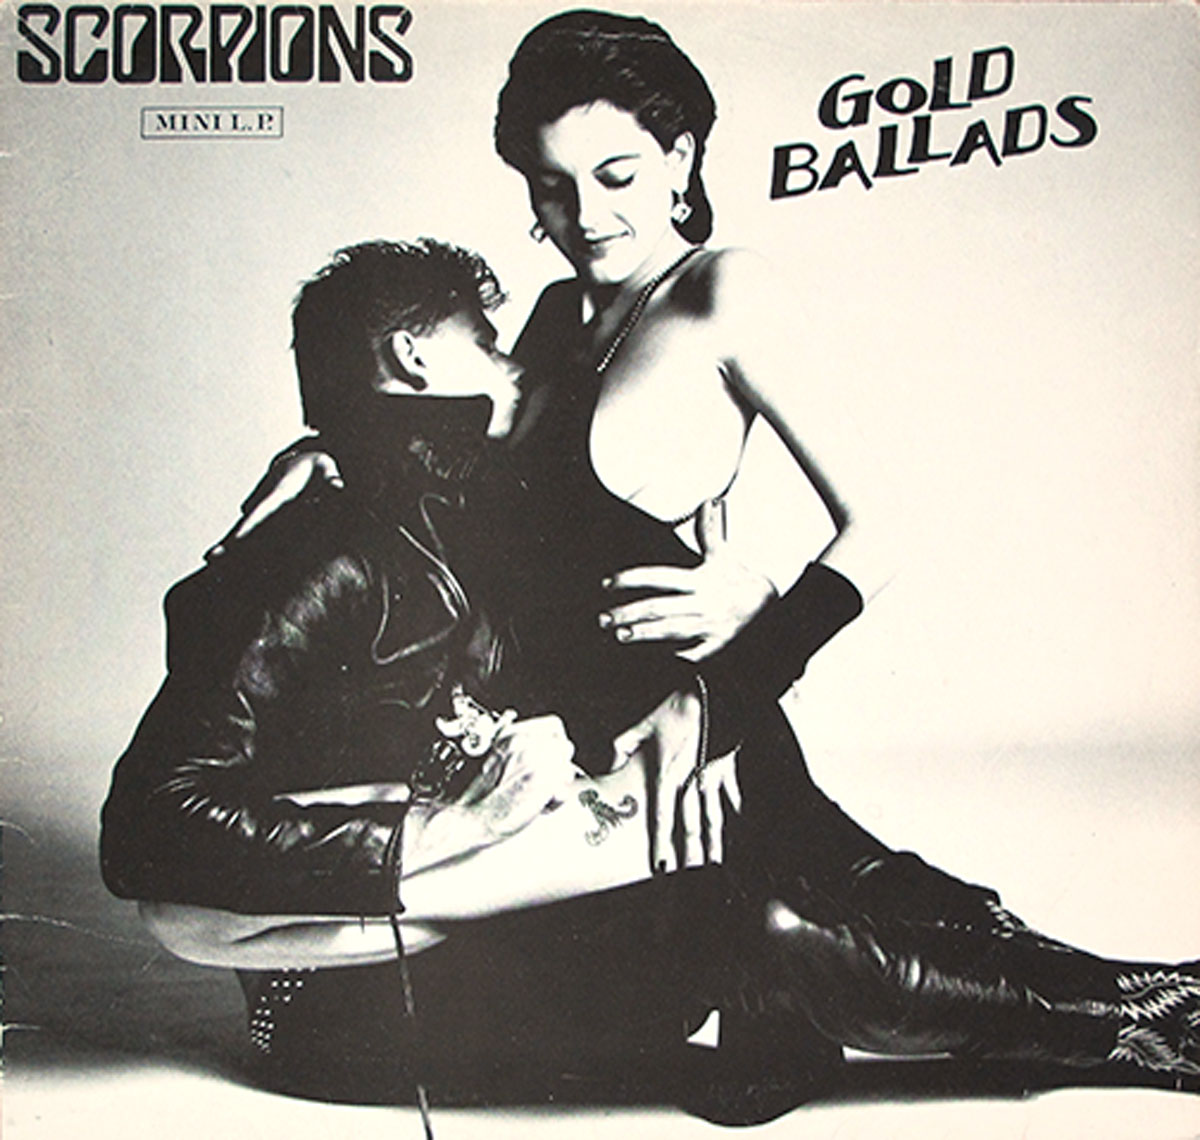 High Resolution Photos of scorpions gold ballads spain 